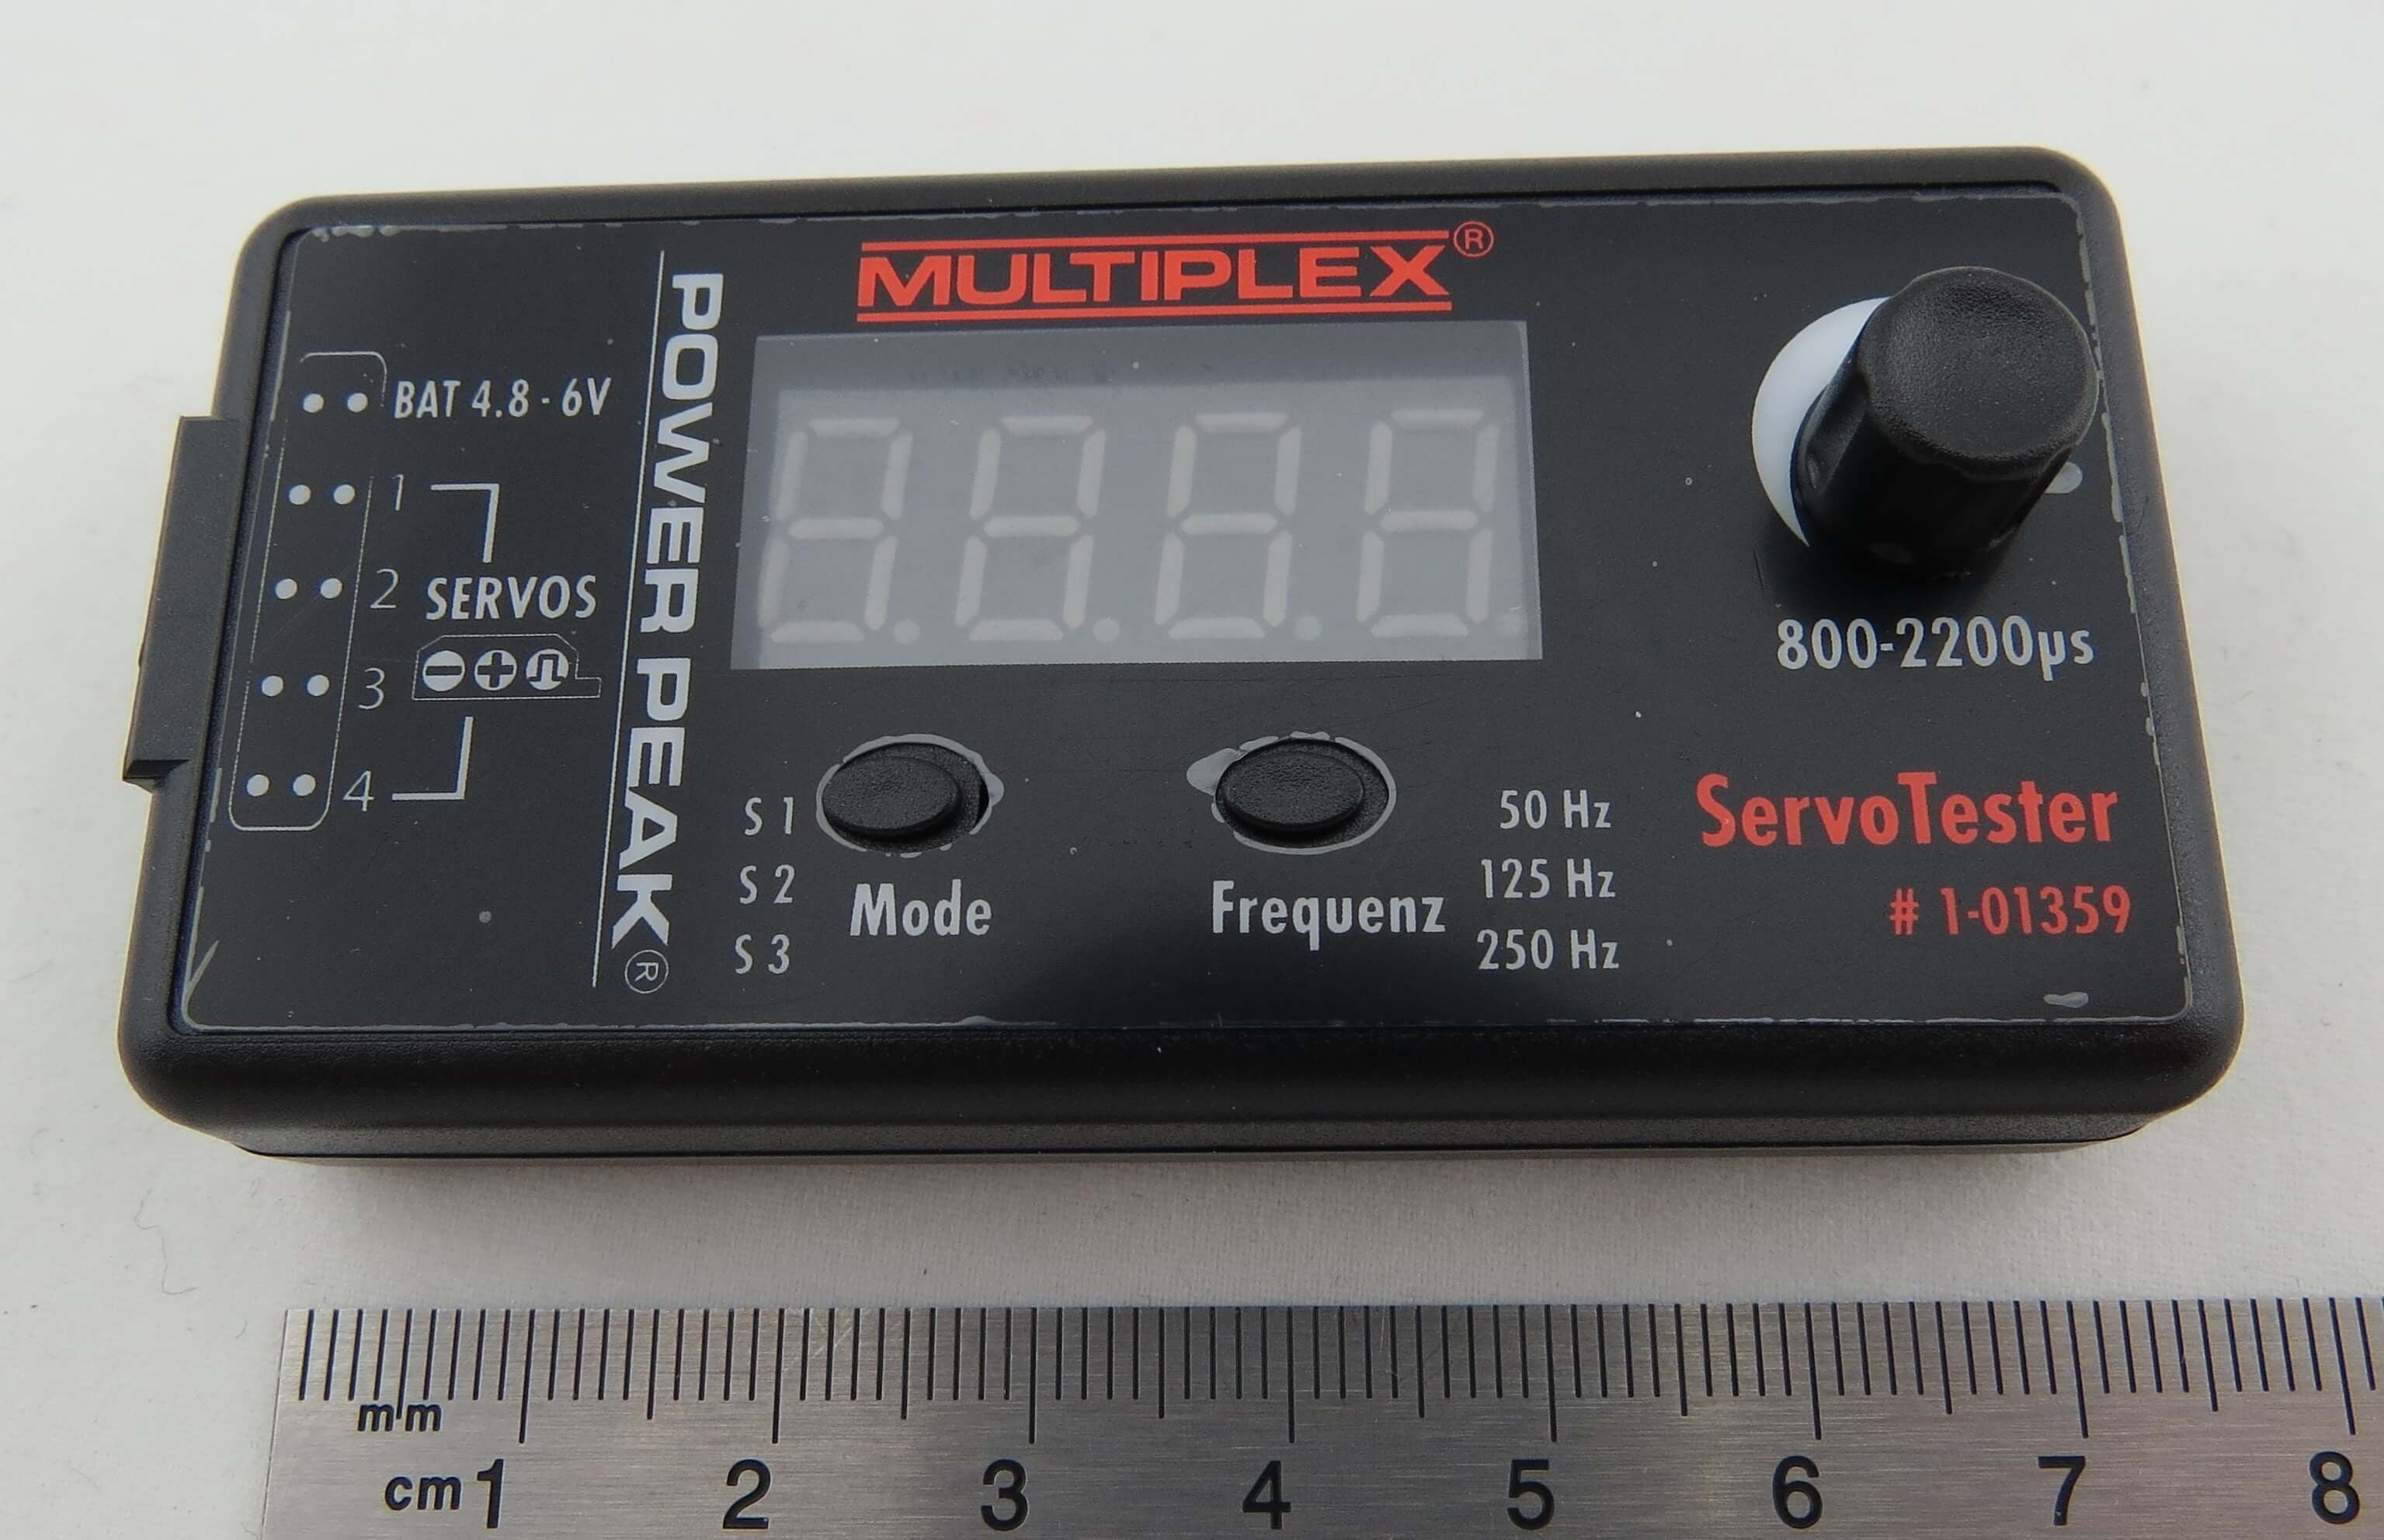 Multiplex servo tester PowerPeak 1-01359